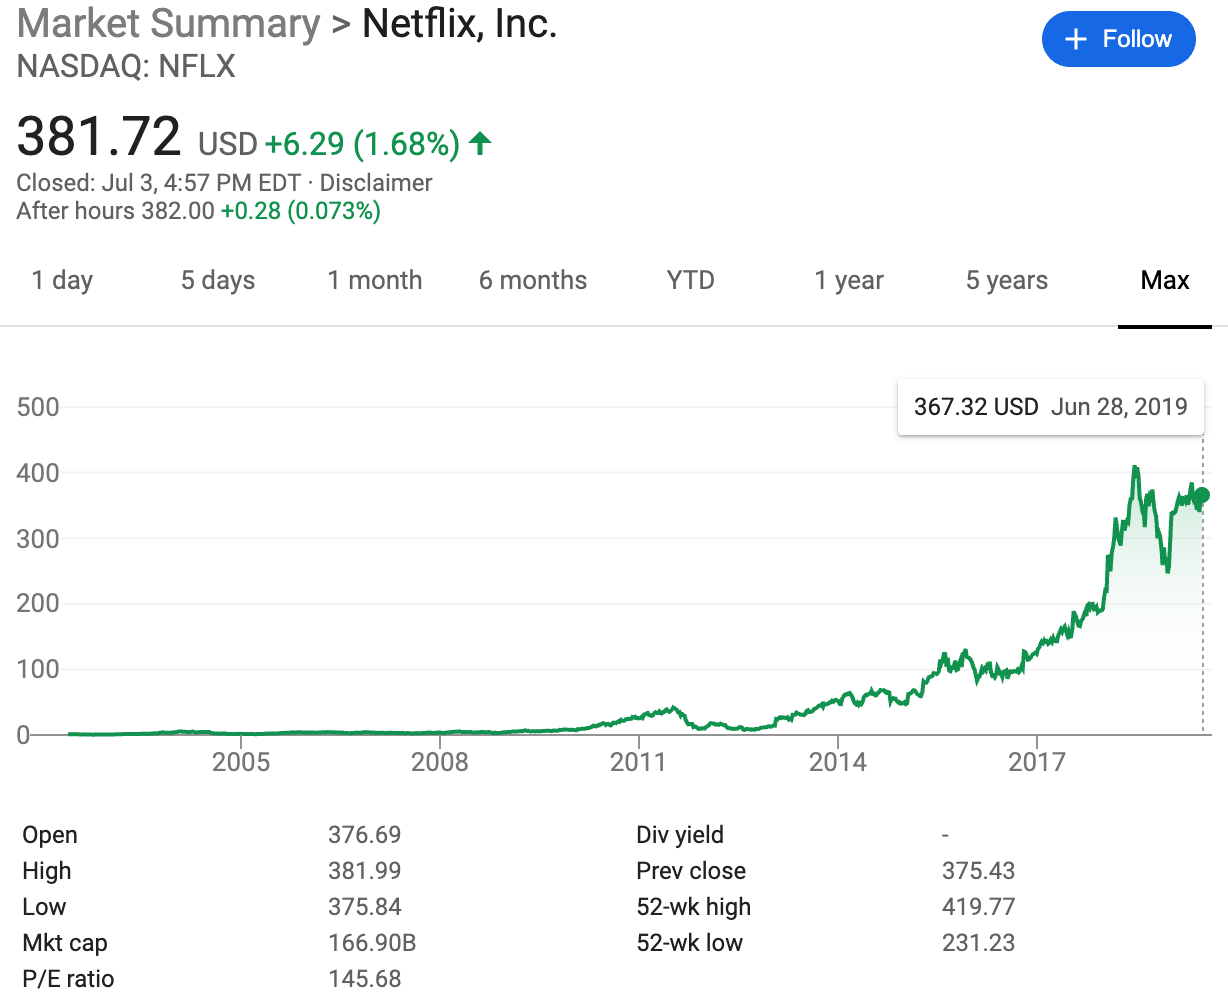 Netflix 11-year stock price